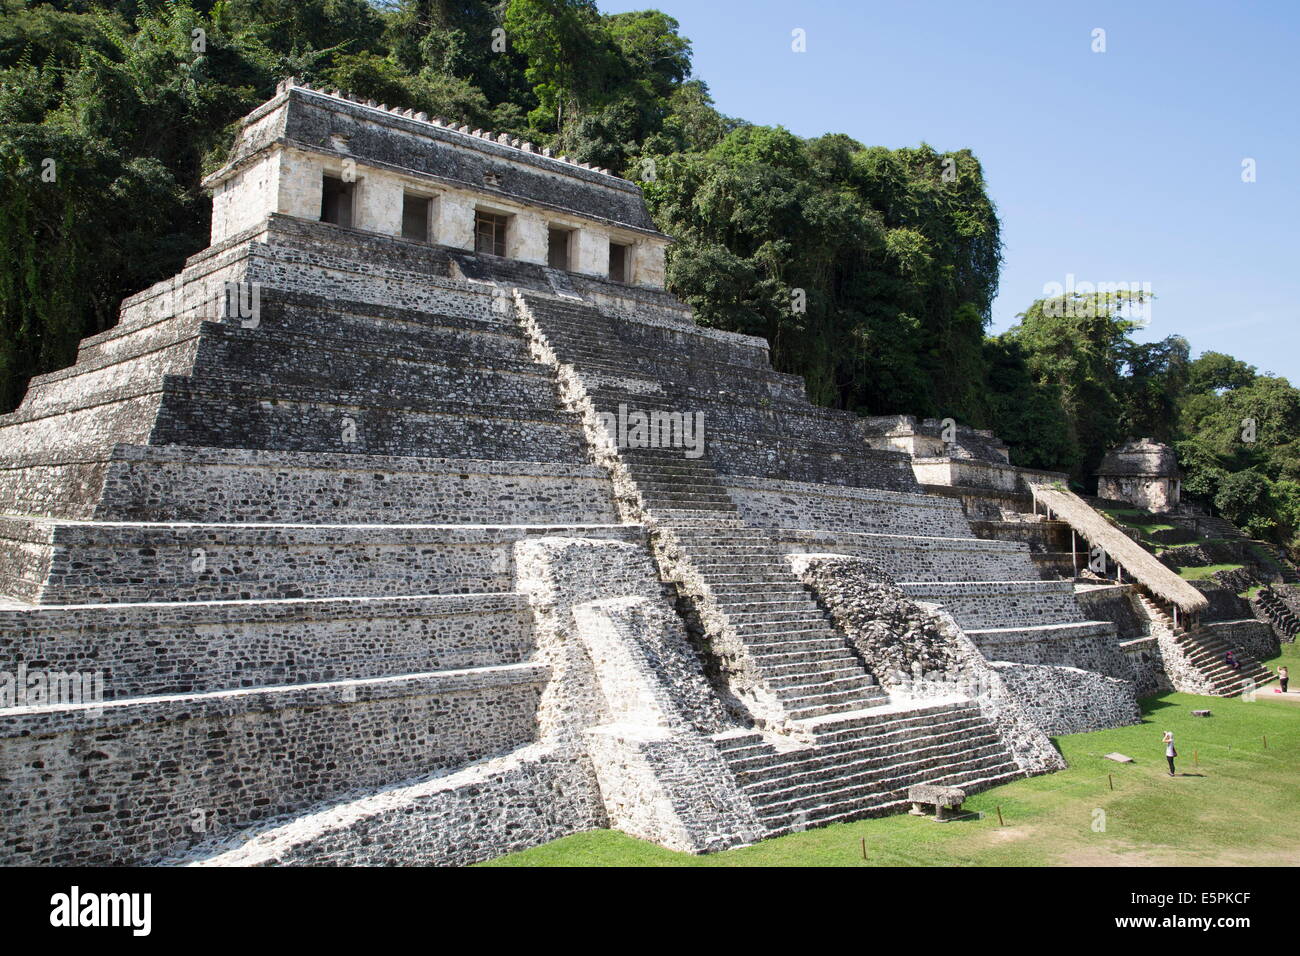 Tempel der Inschriften in Palenque archäologischer Park, UNESCO World Heritage Site, Palenque, Chiapas, Mexiko, Nordamerika Stockfoto